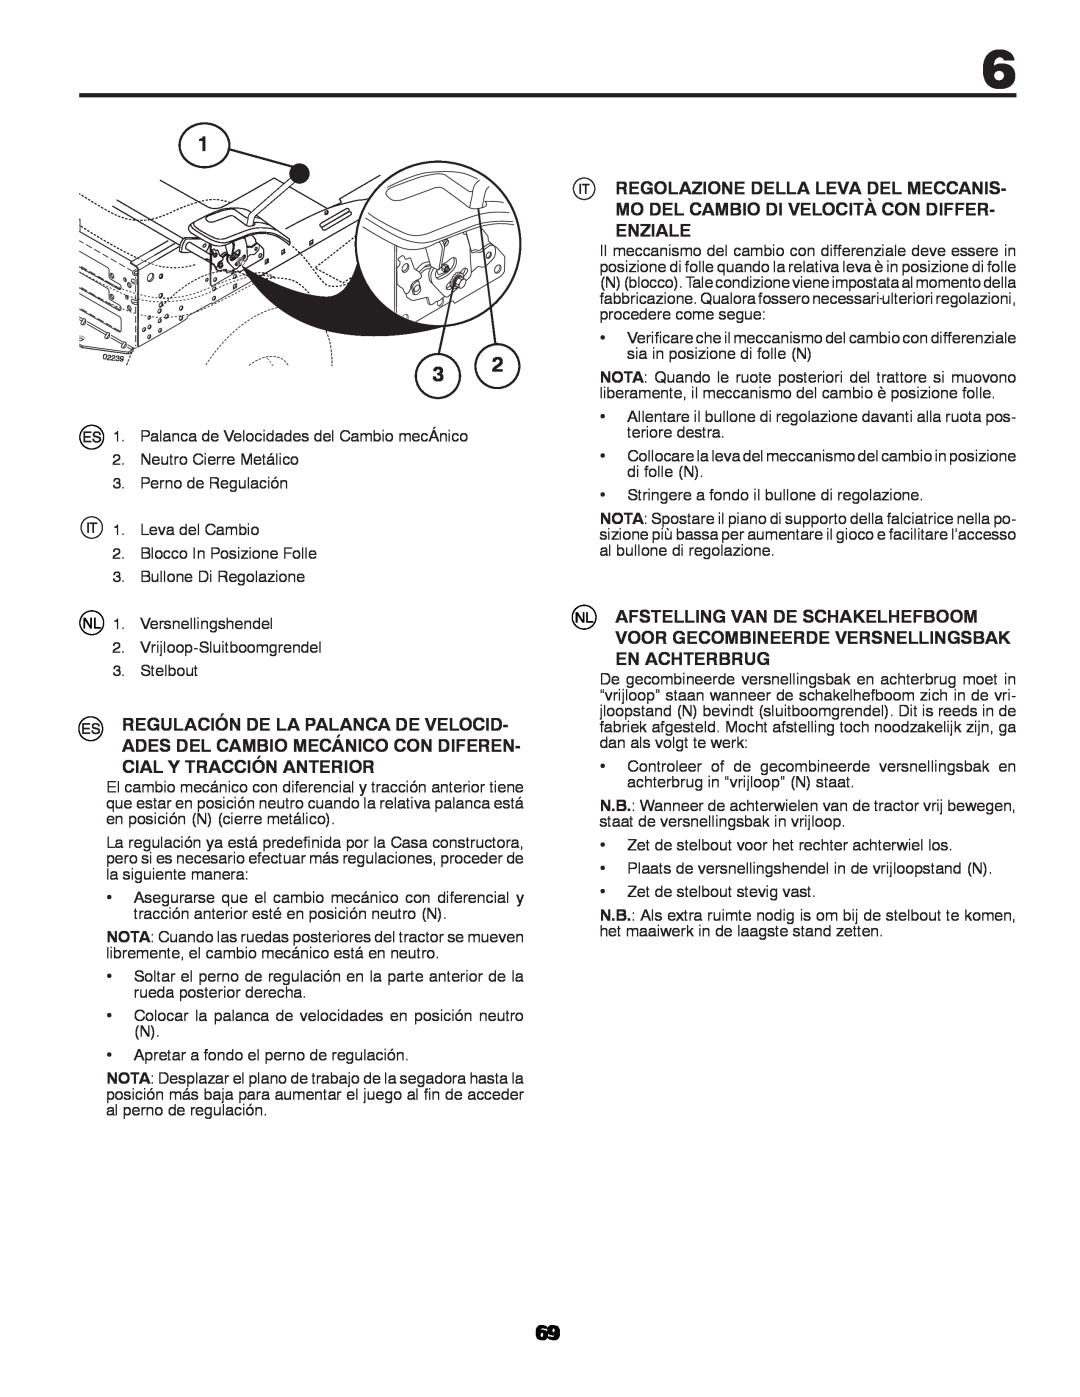 McCulloch 532 43 42-91 Rev. 1 instruction manual Palanca de Velocidades del Cambio mecÁnico 